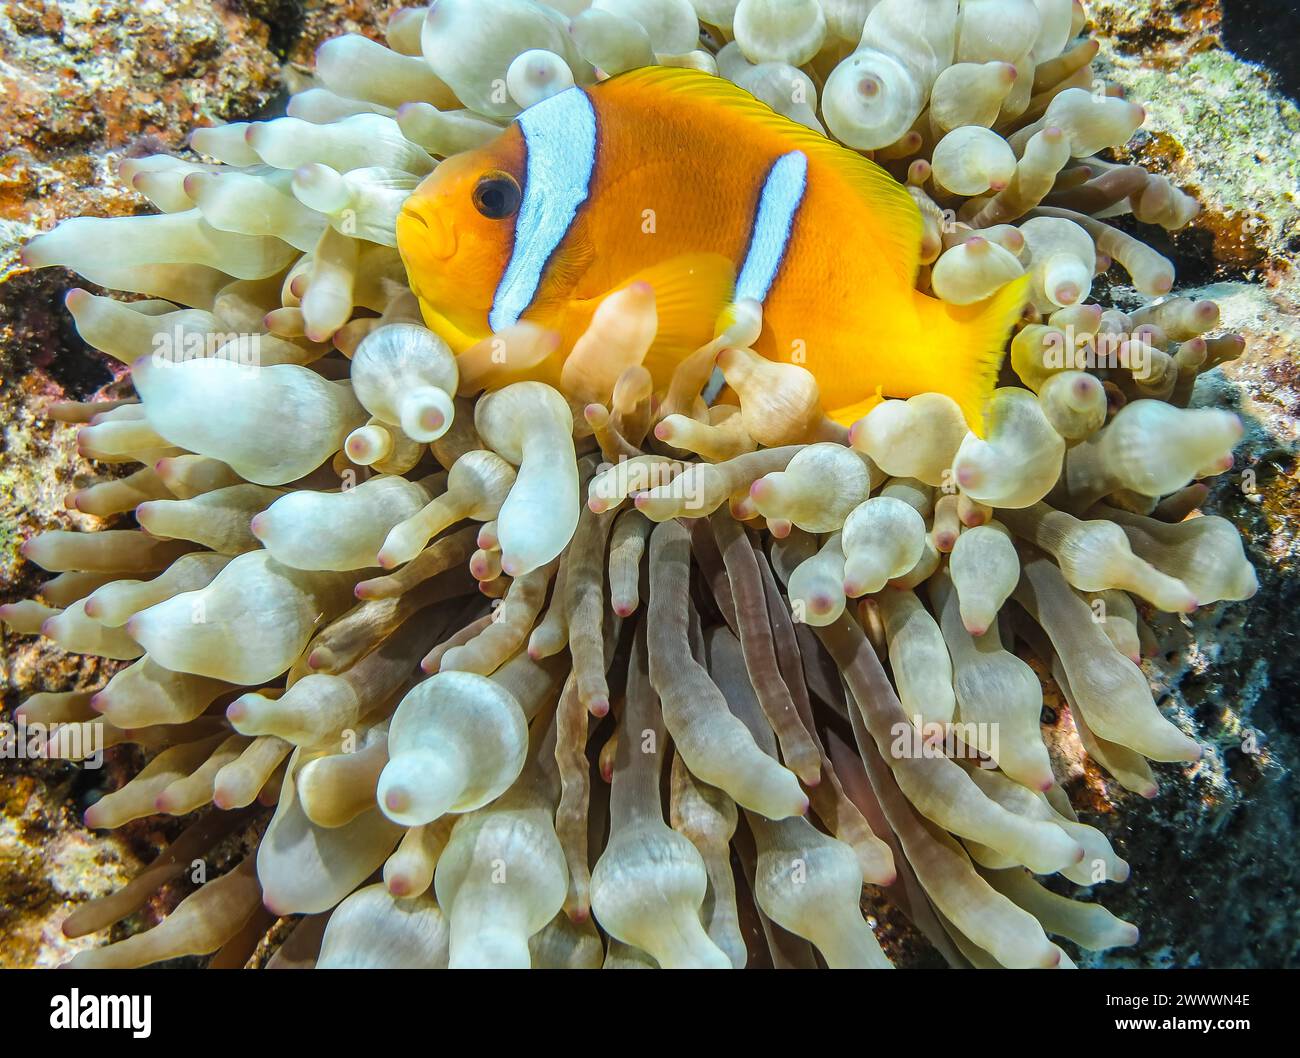 Blasenanemone (Entacmaea quadricolor), Rotmeer-Anemonenfisch (Amphiprion bicinctus), Tauchplatz Siyul Kebir Reef, Rotes Meer, Ägypten Foto Stock